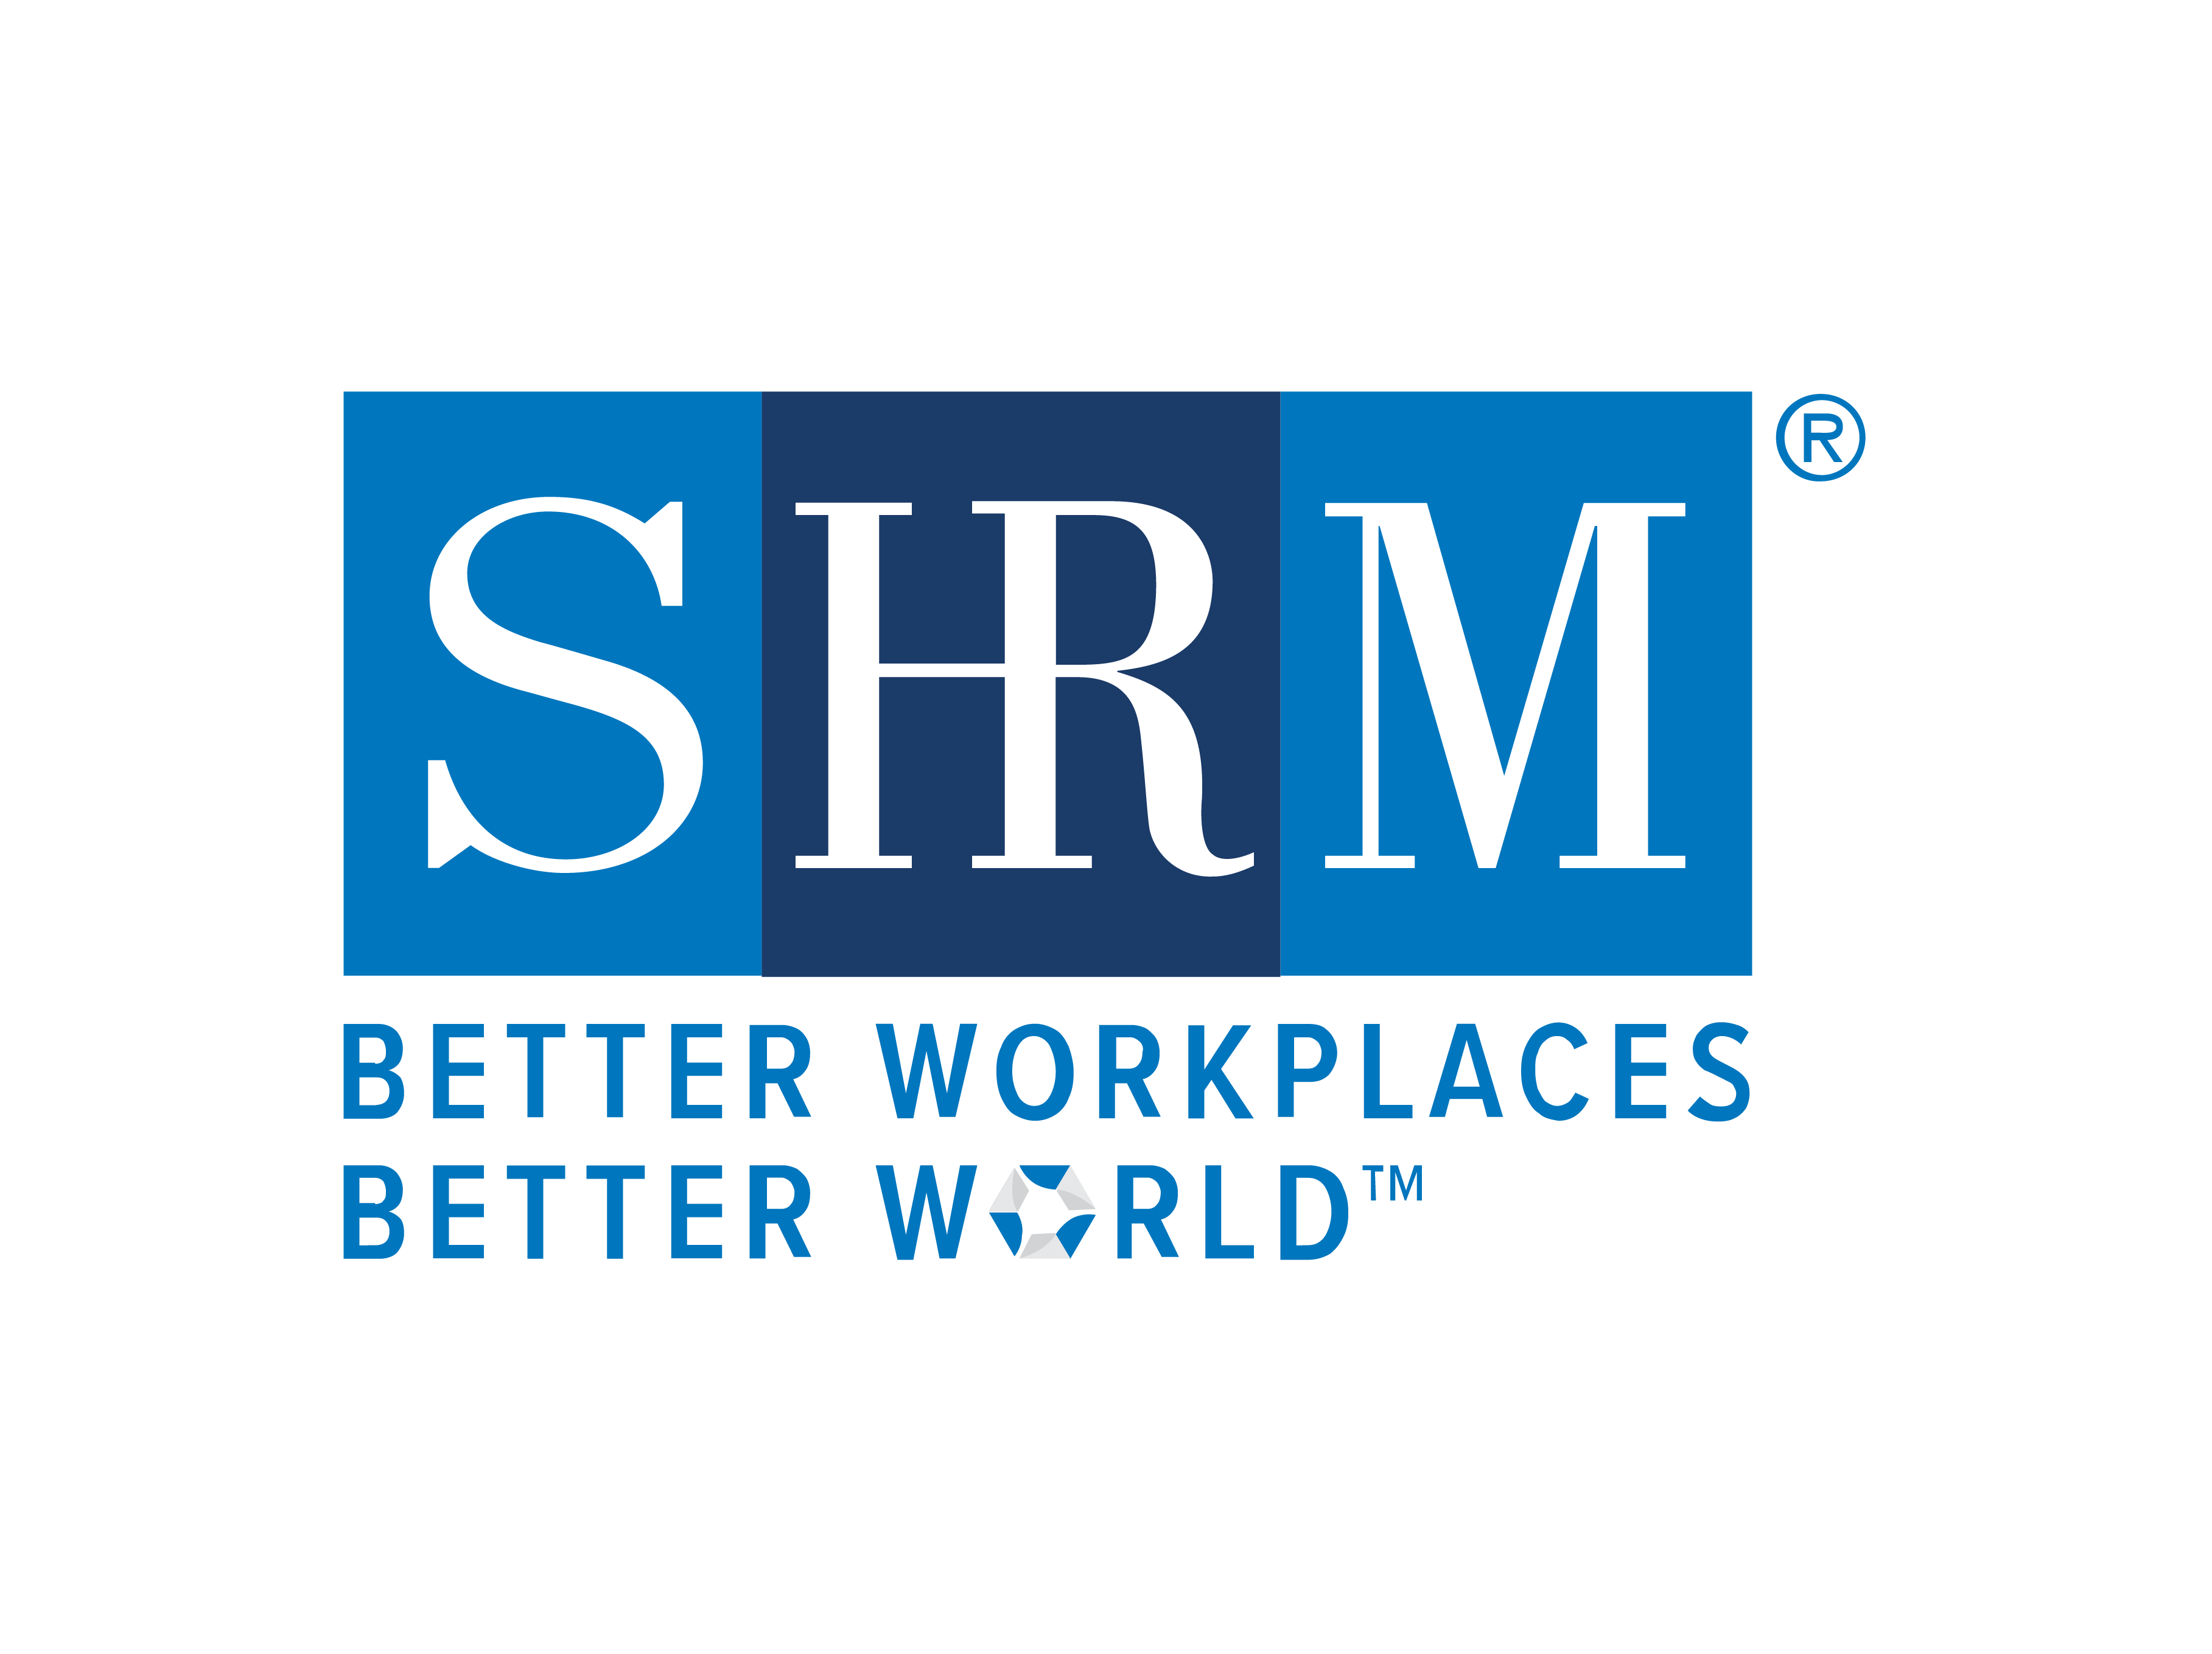 Human Resource Management Logo Png